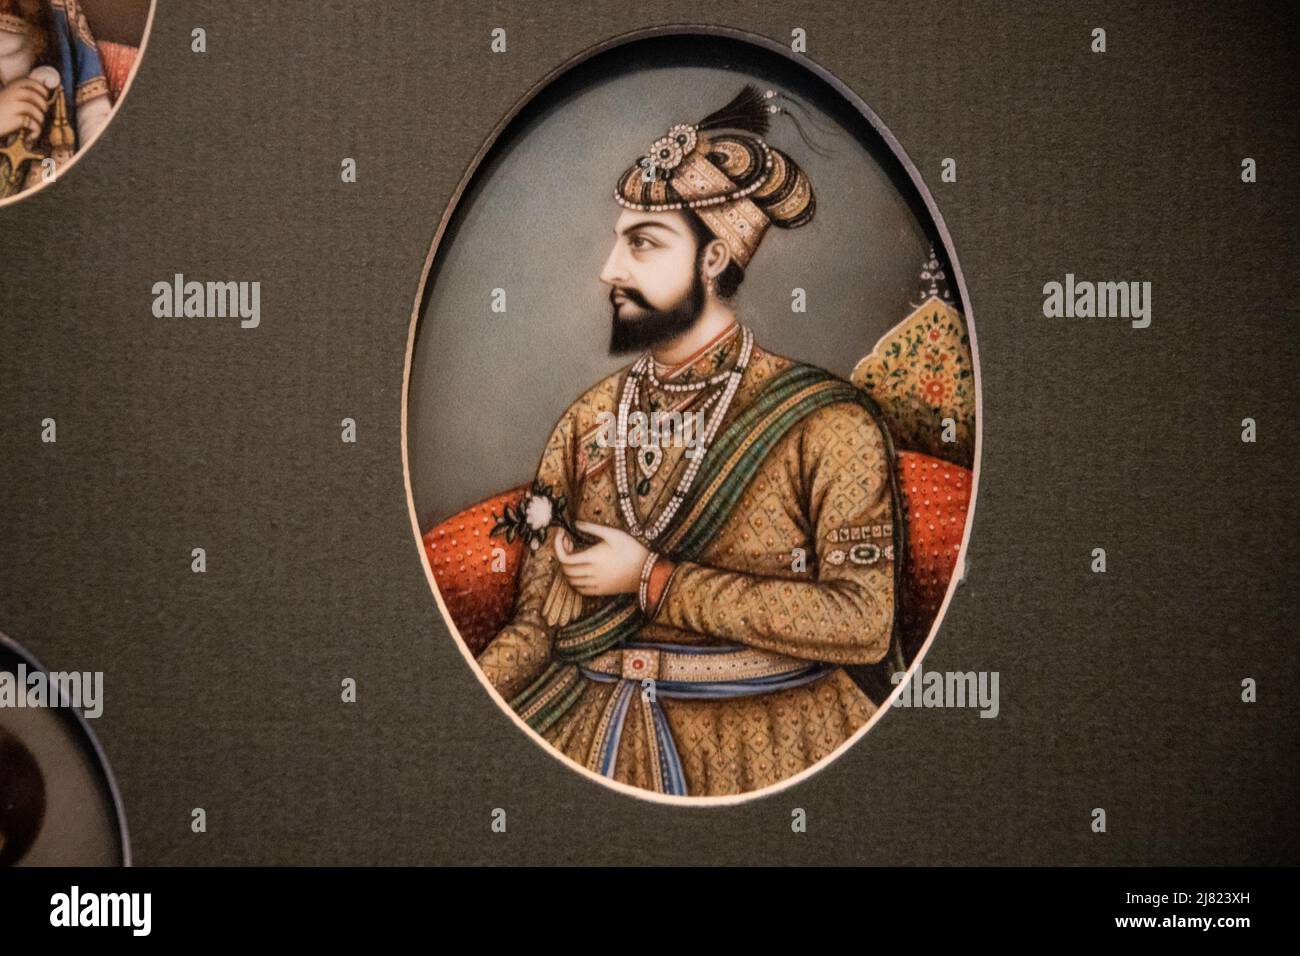 Miniature of Shah Jahan at the Brilliantovaya Kladovaya Museum, St Petersburg, Russia Stock Photo